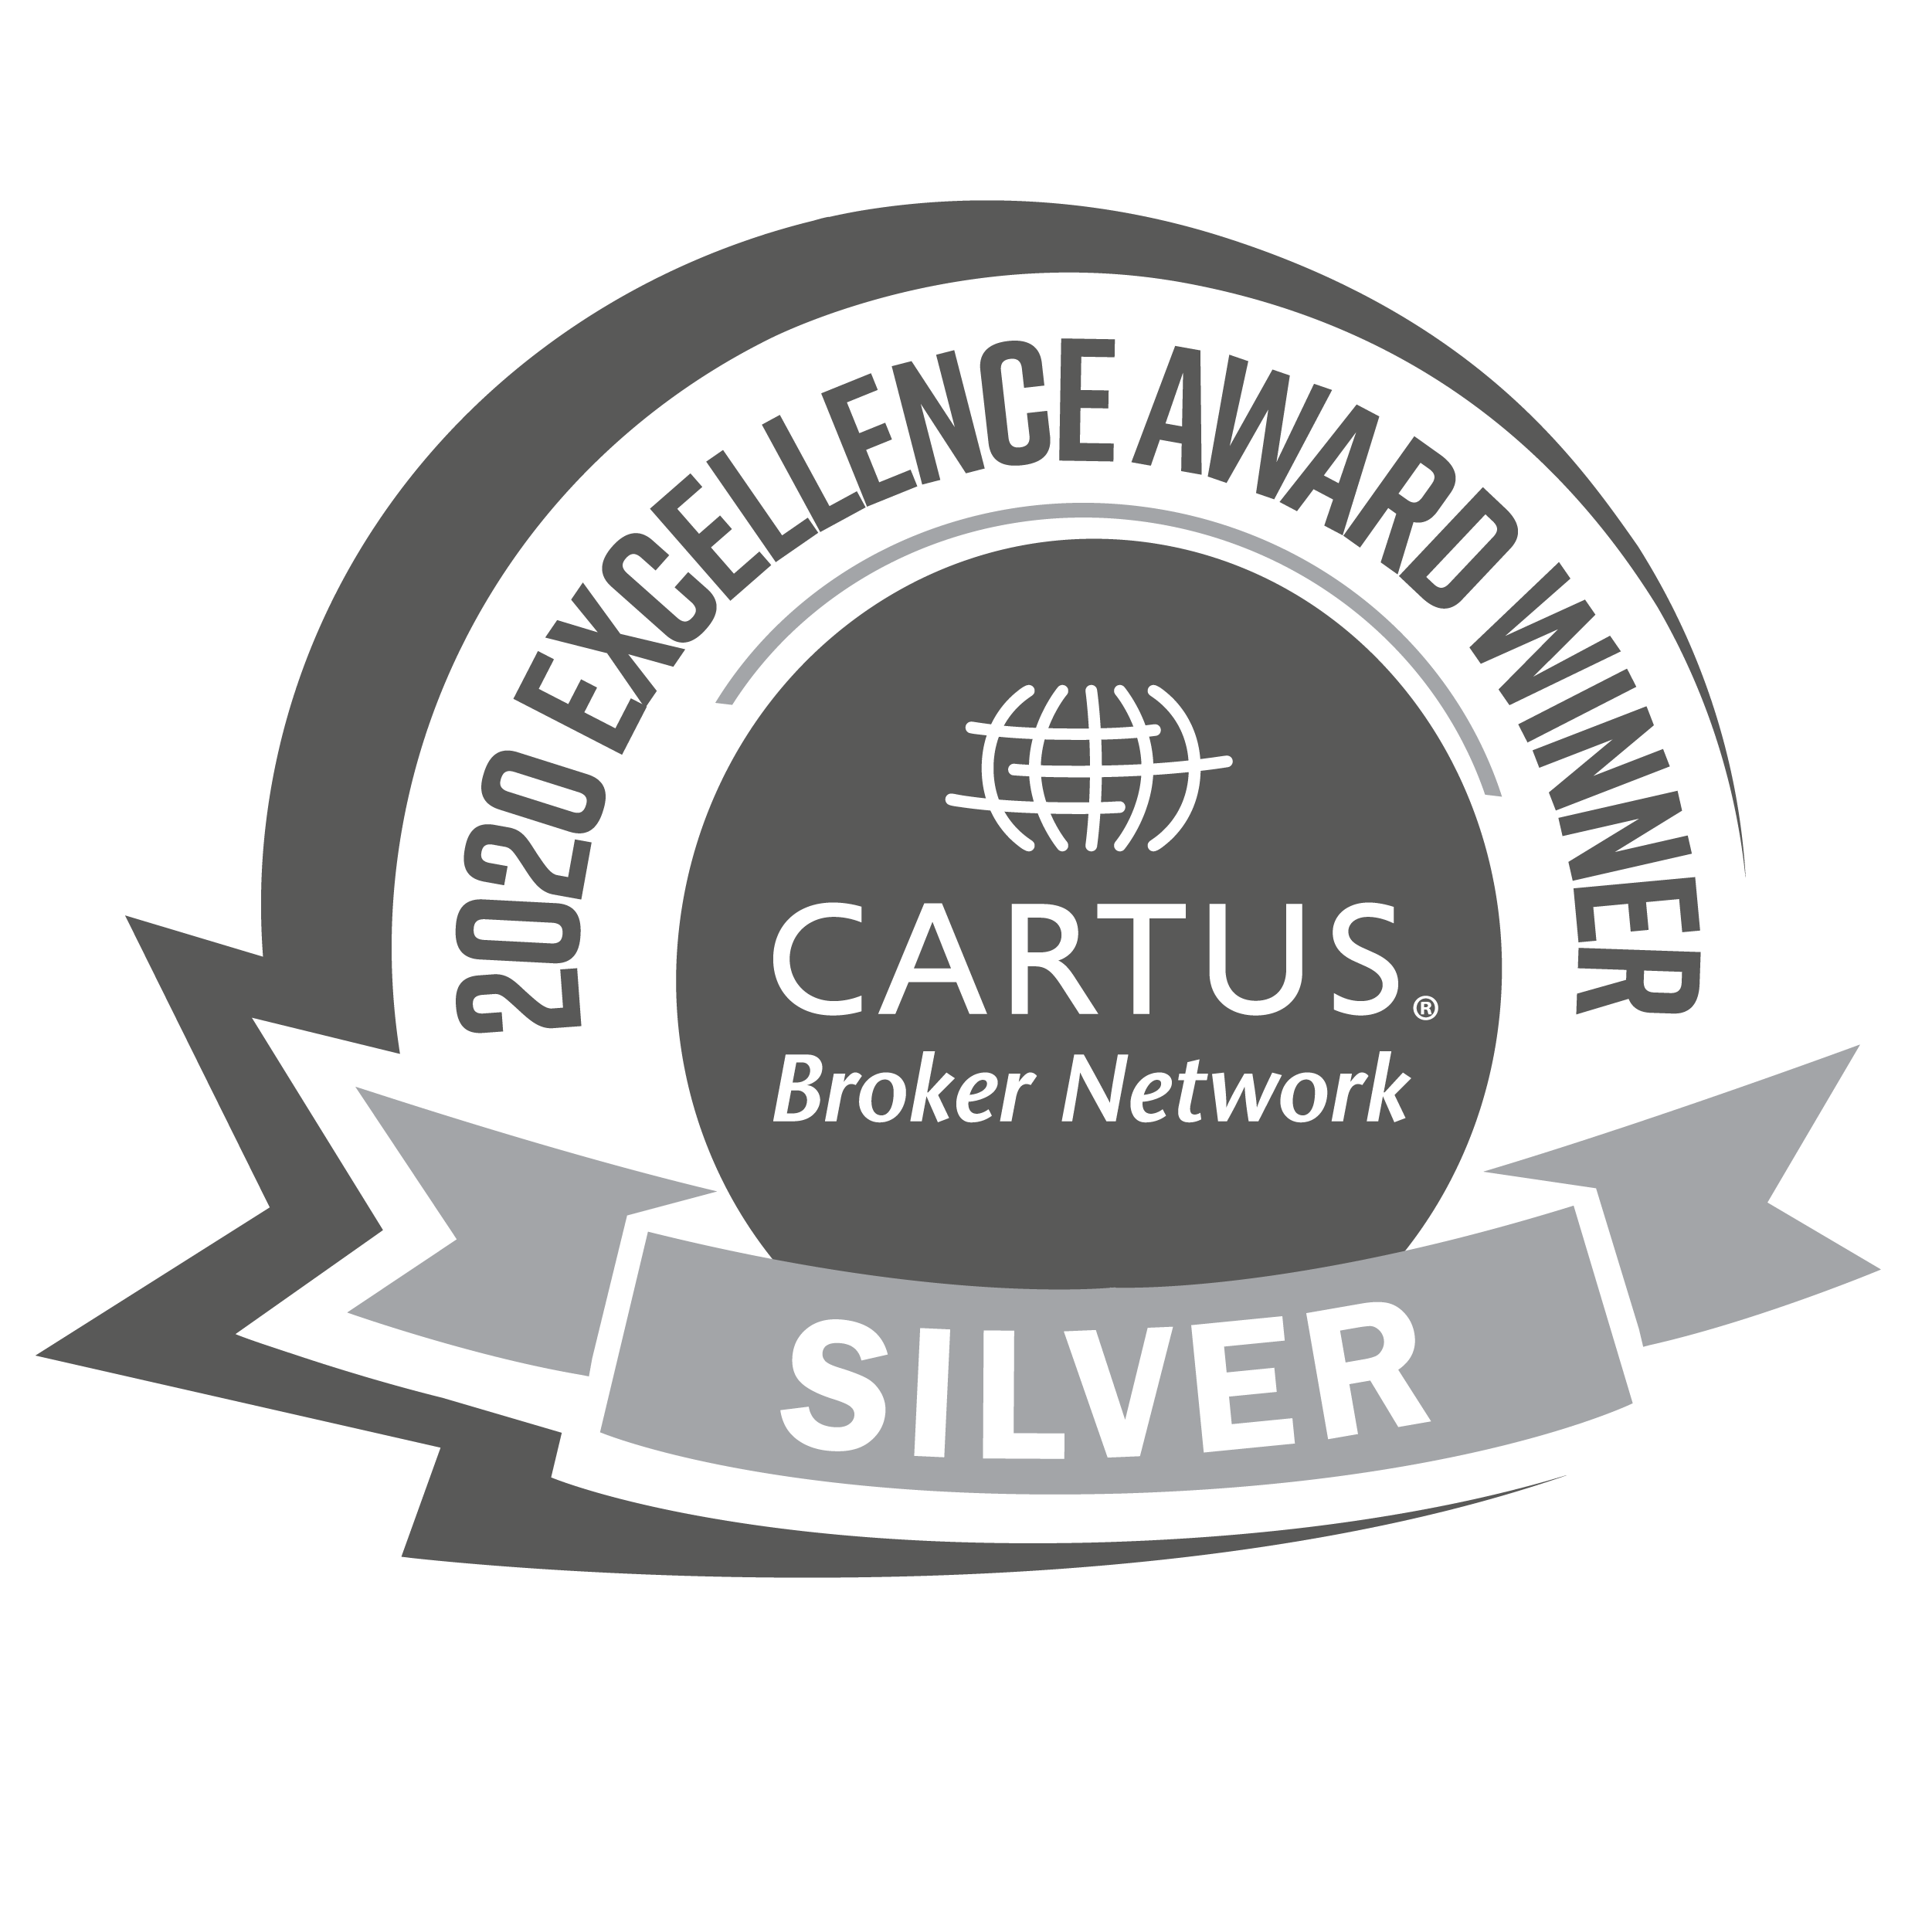 2017 Excellence Award Winner - Platinum - Cartus Broker Network